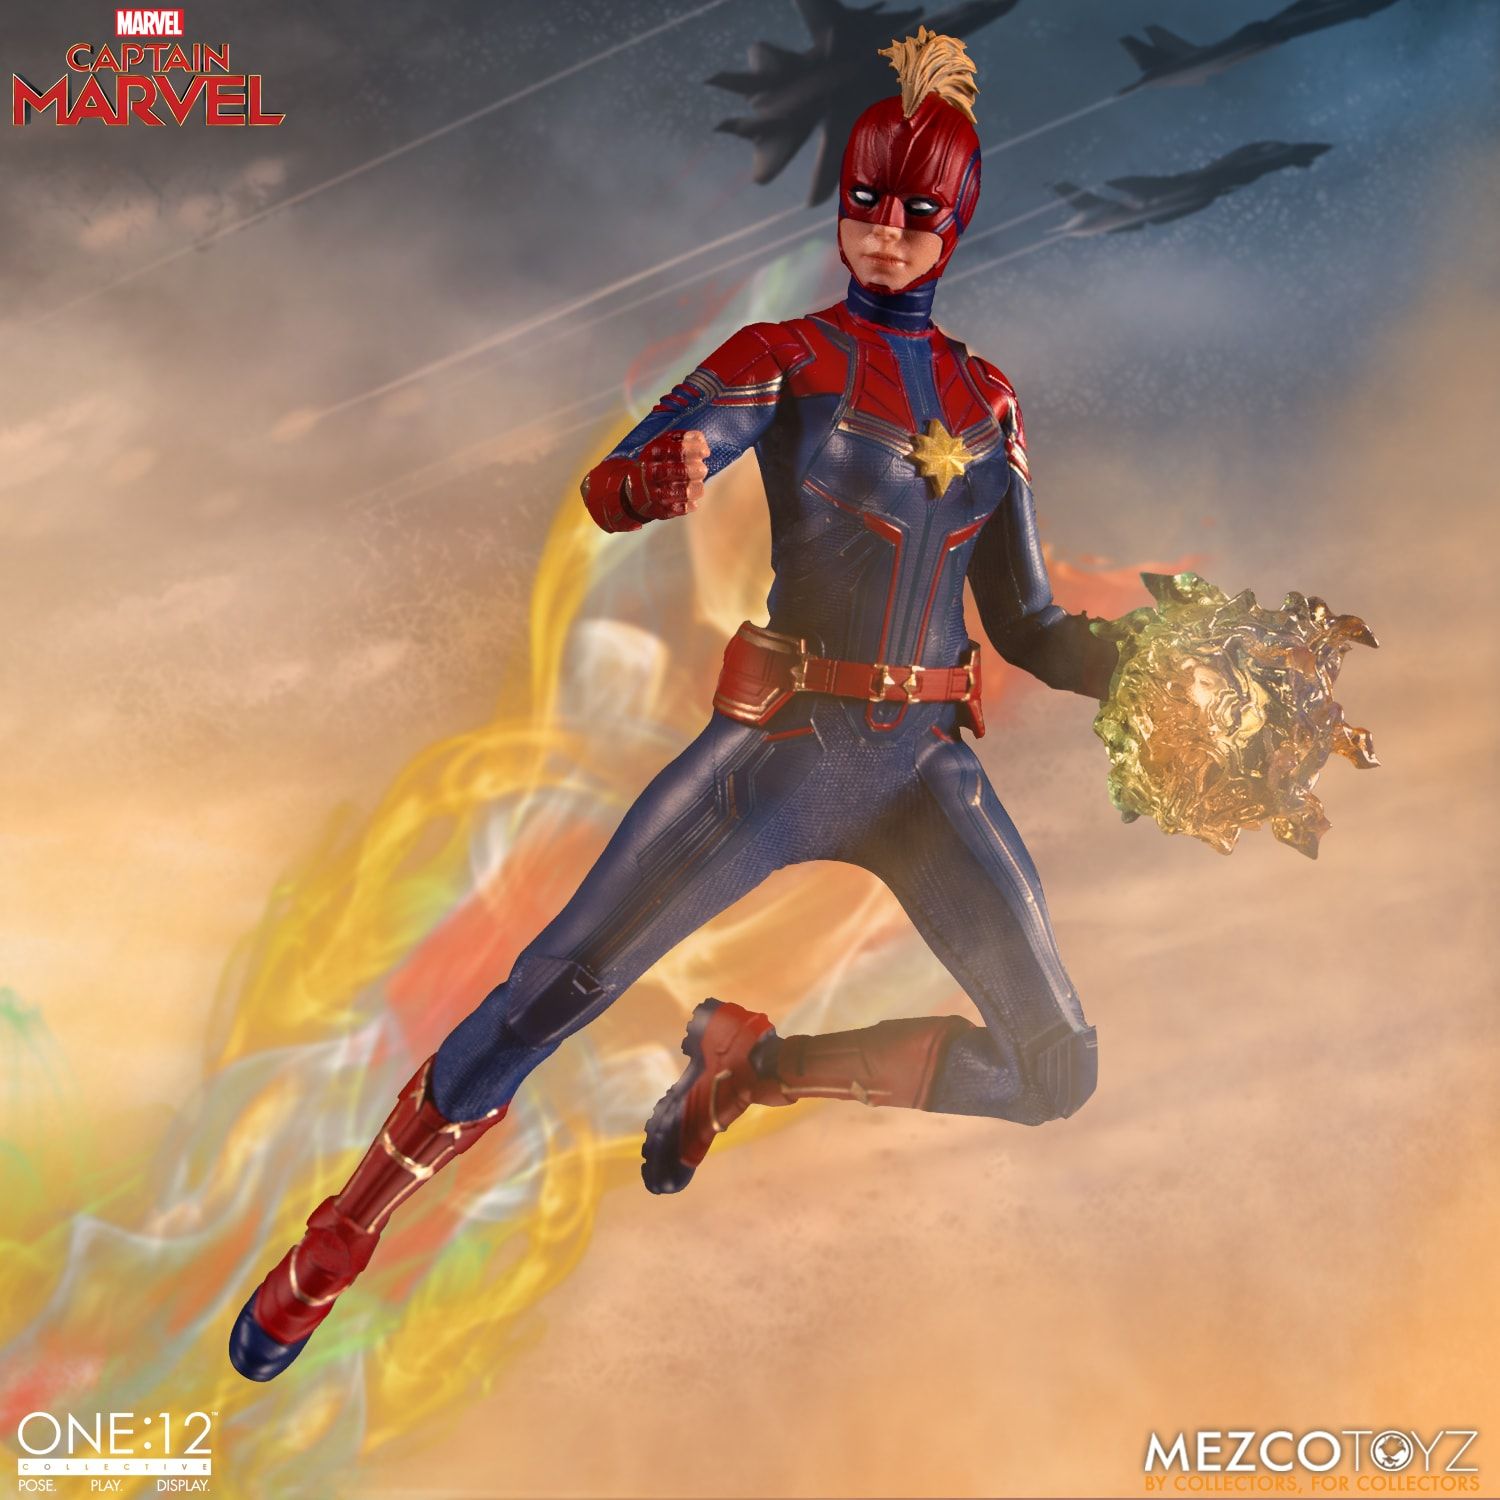 Mezco - One:12 Collective - Captain Marvel - Captain Marvel - Marvelous Toys